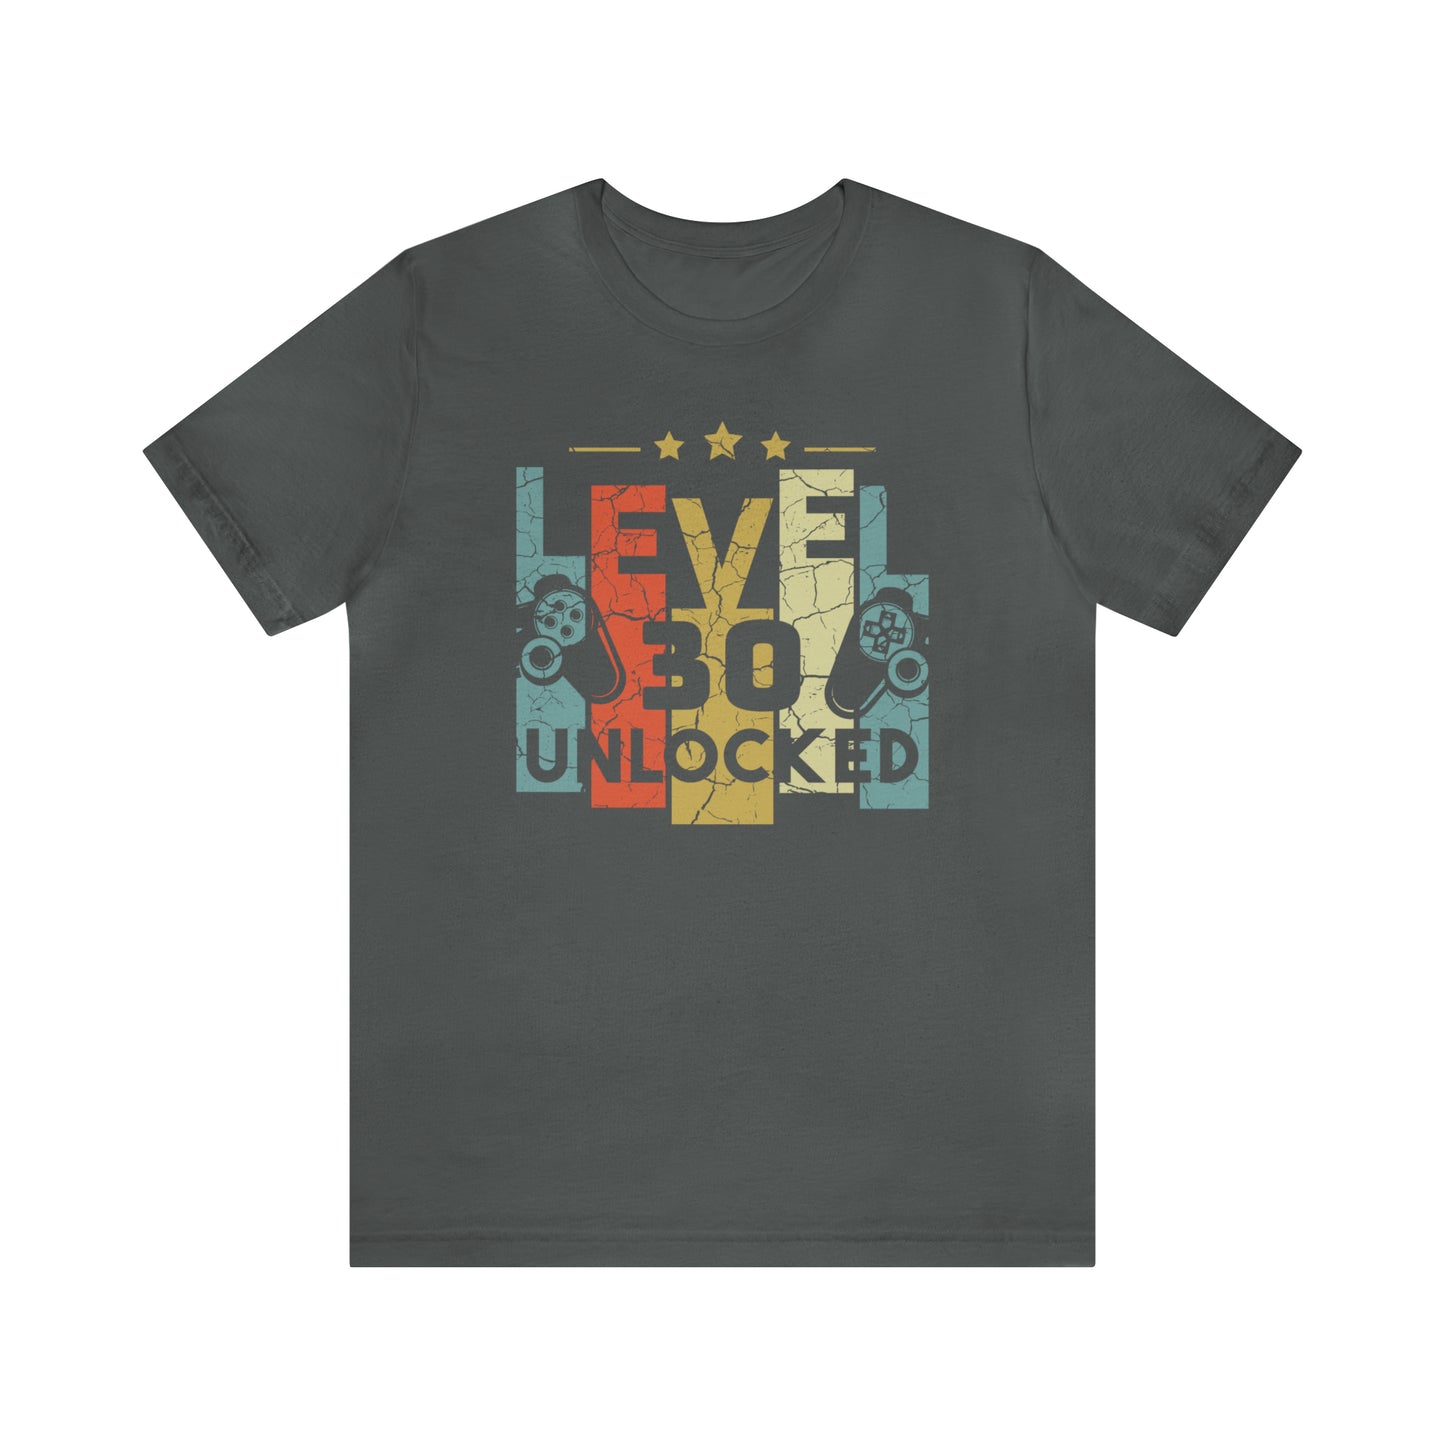 30th Birthday Gift for men or brother, Level 30 Unlocked Funny Gamer Shirt for son or boyfriend